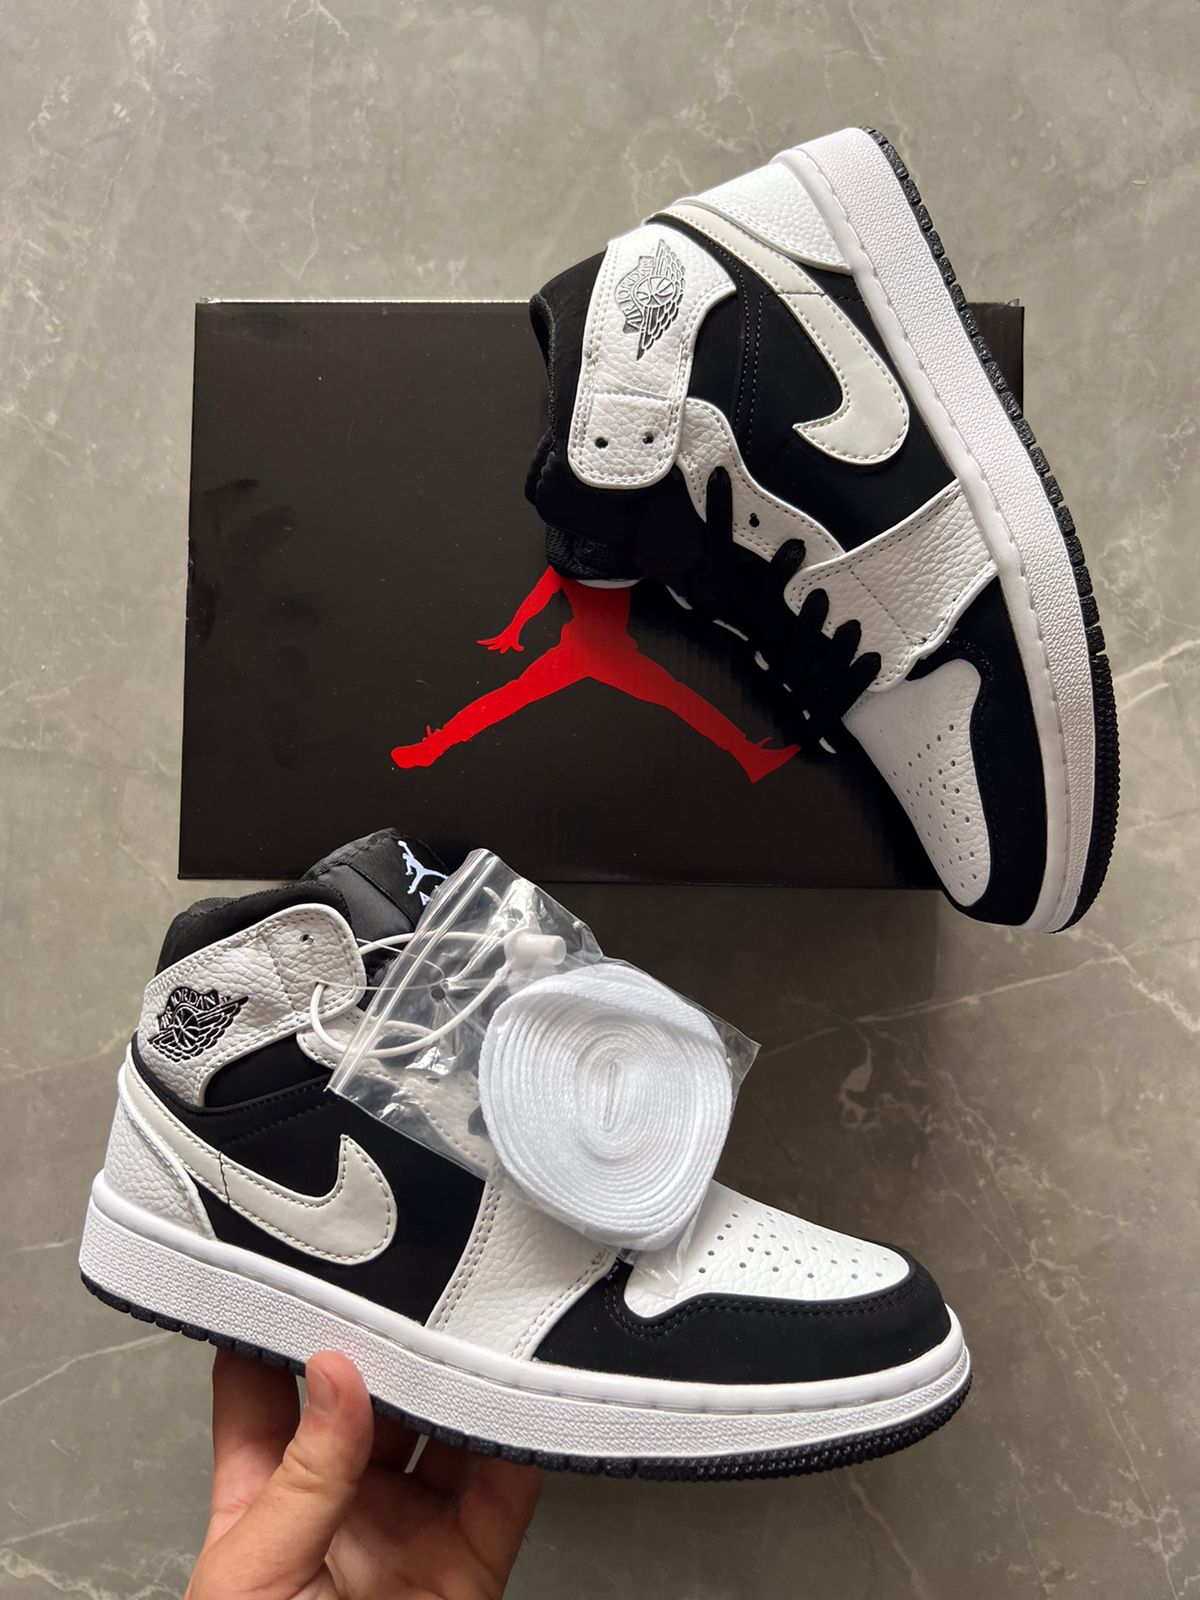 Retro One Split White Black Sneakers Unisex